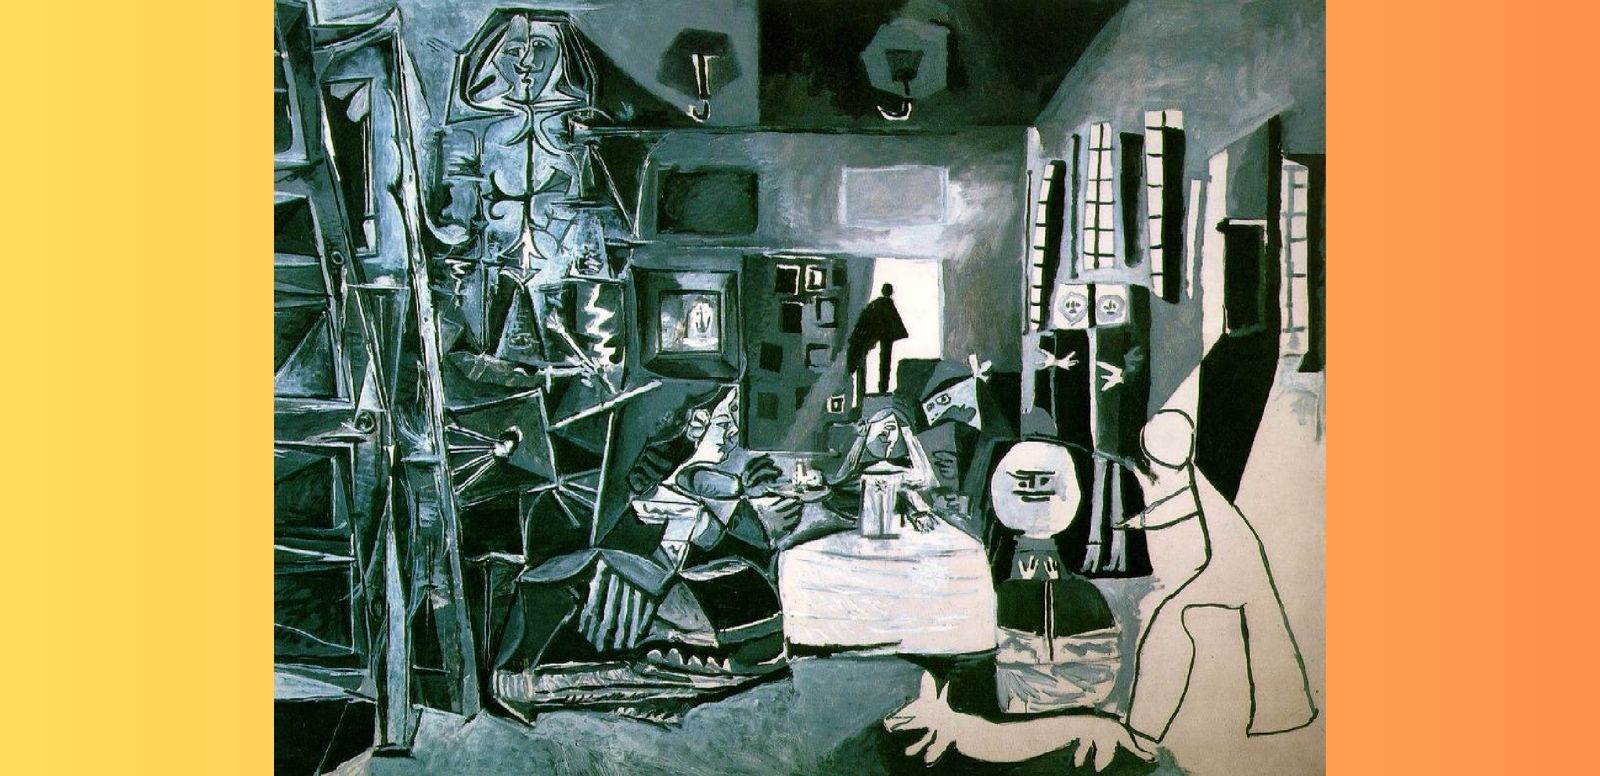 Pablo Picasso, "Las Meninas", 1957